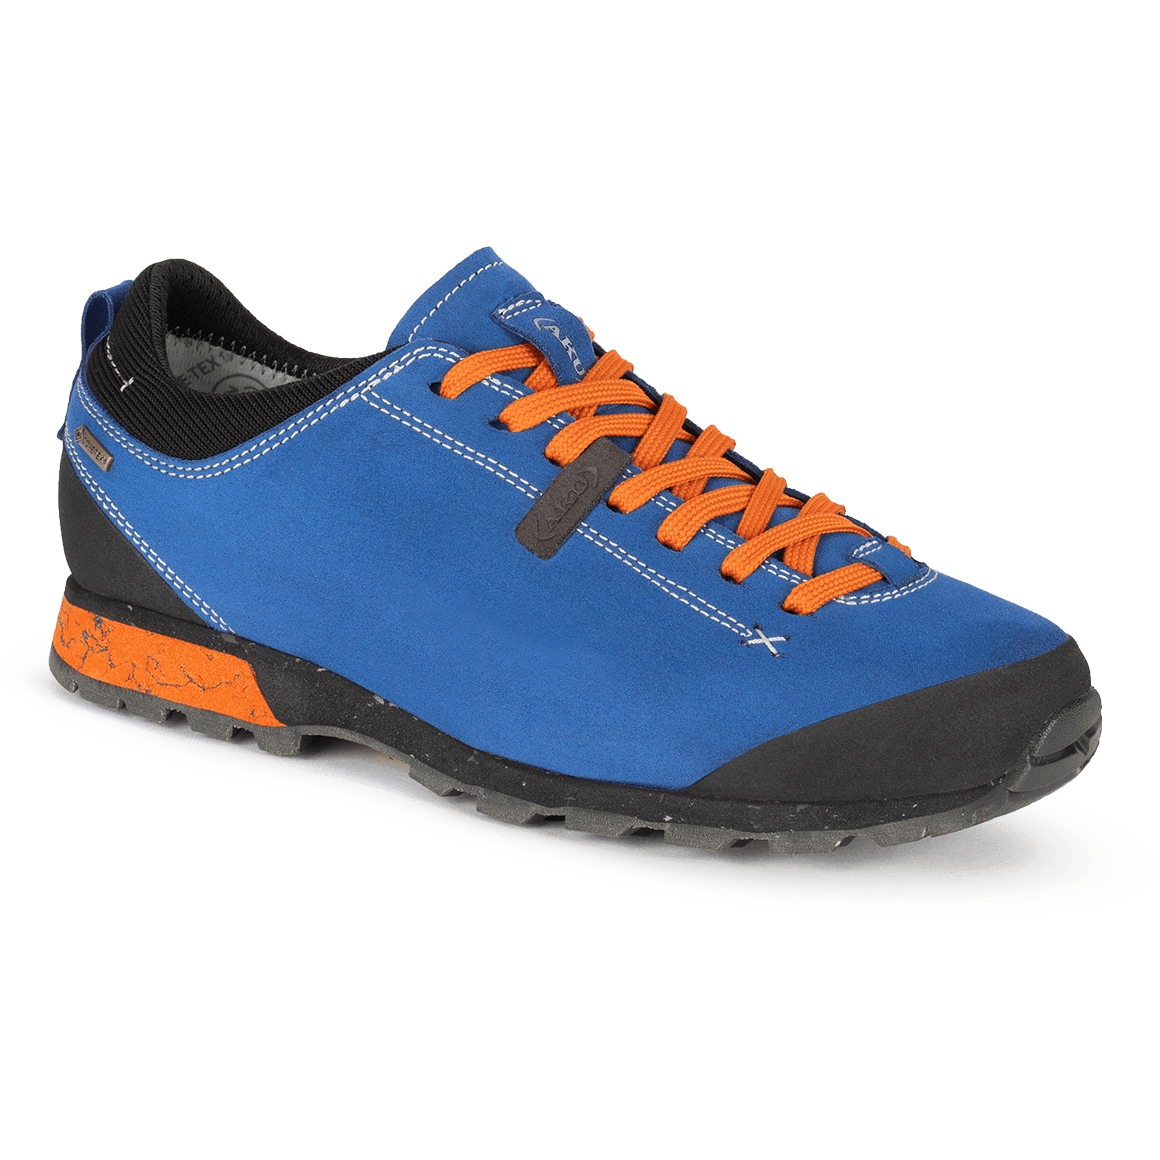 Picture of AKU Bellamont 3 V-Light GTX Shoe - Blue-Orange